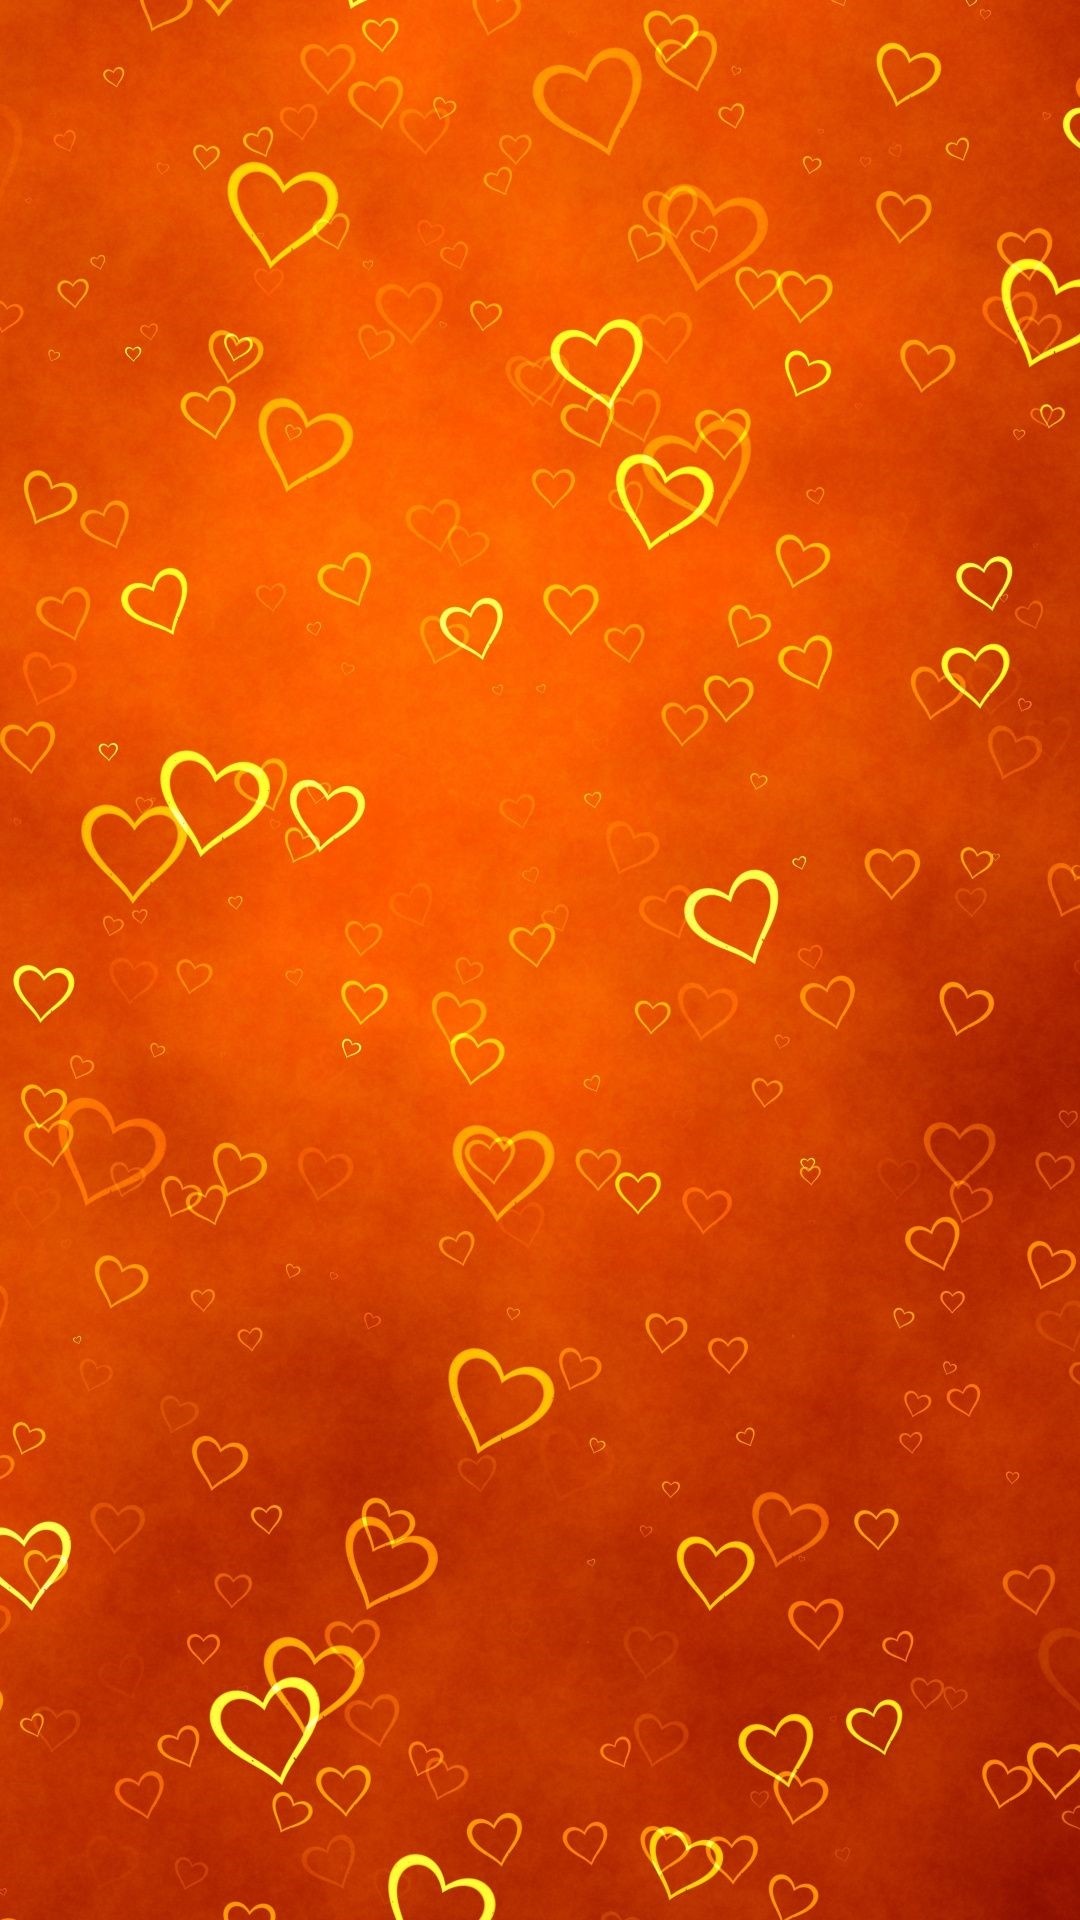 Orange iPhone Wallpaper